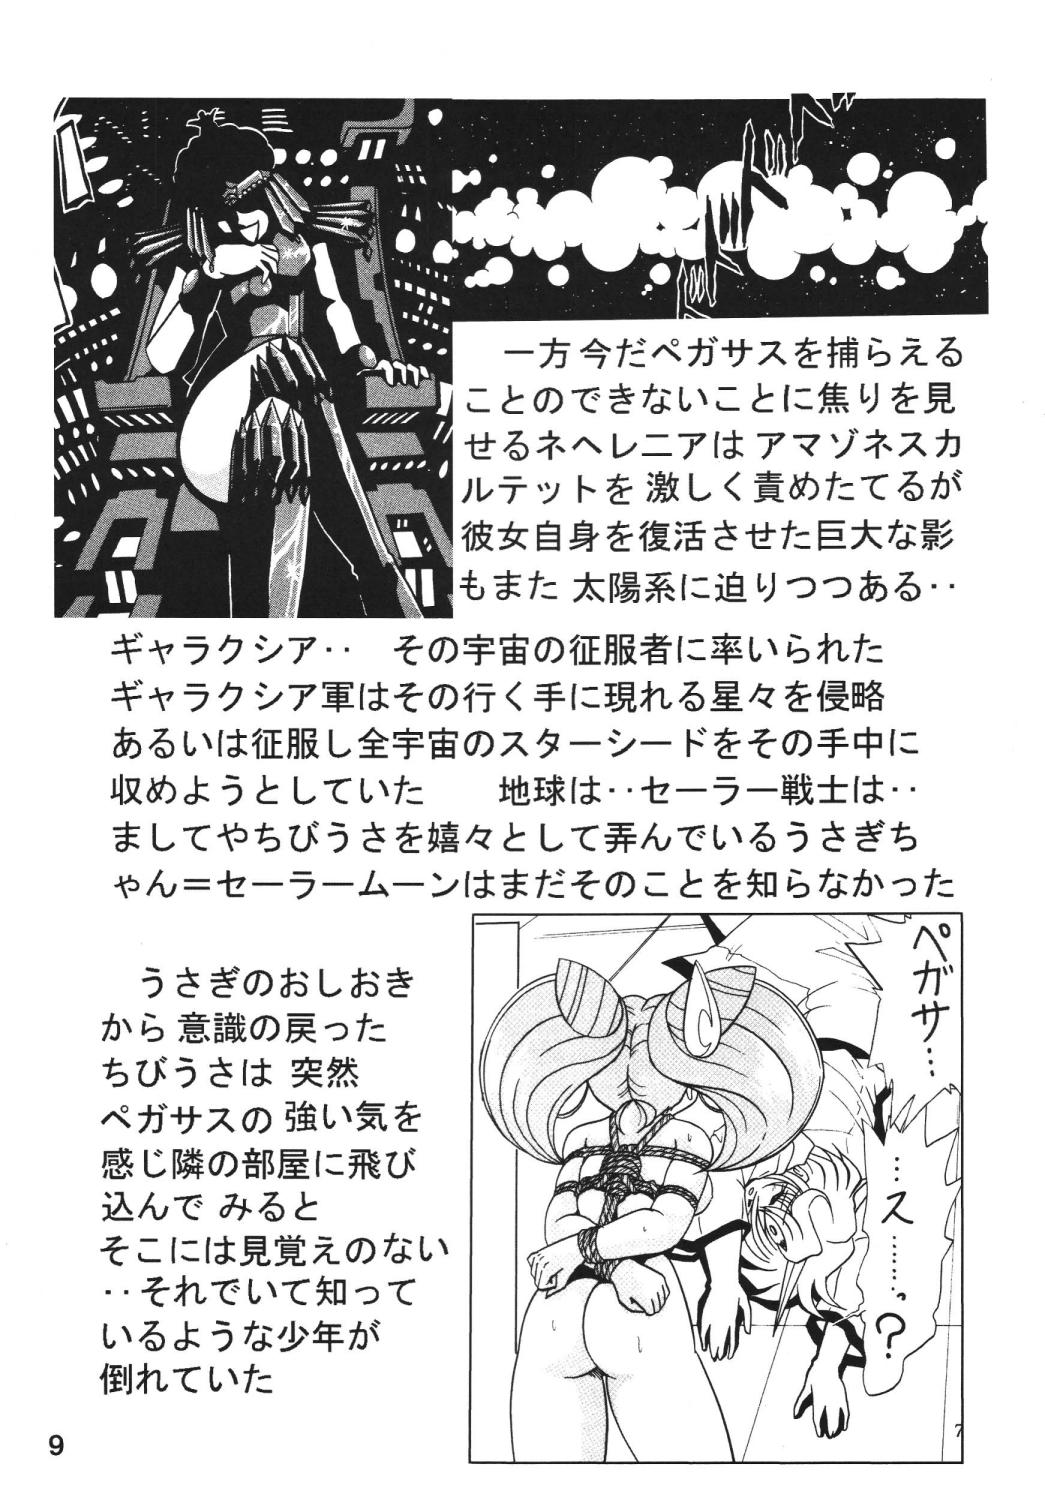 Dicks Silent Saturn SS vol. 7 - Sailor moon Panty - Page 8